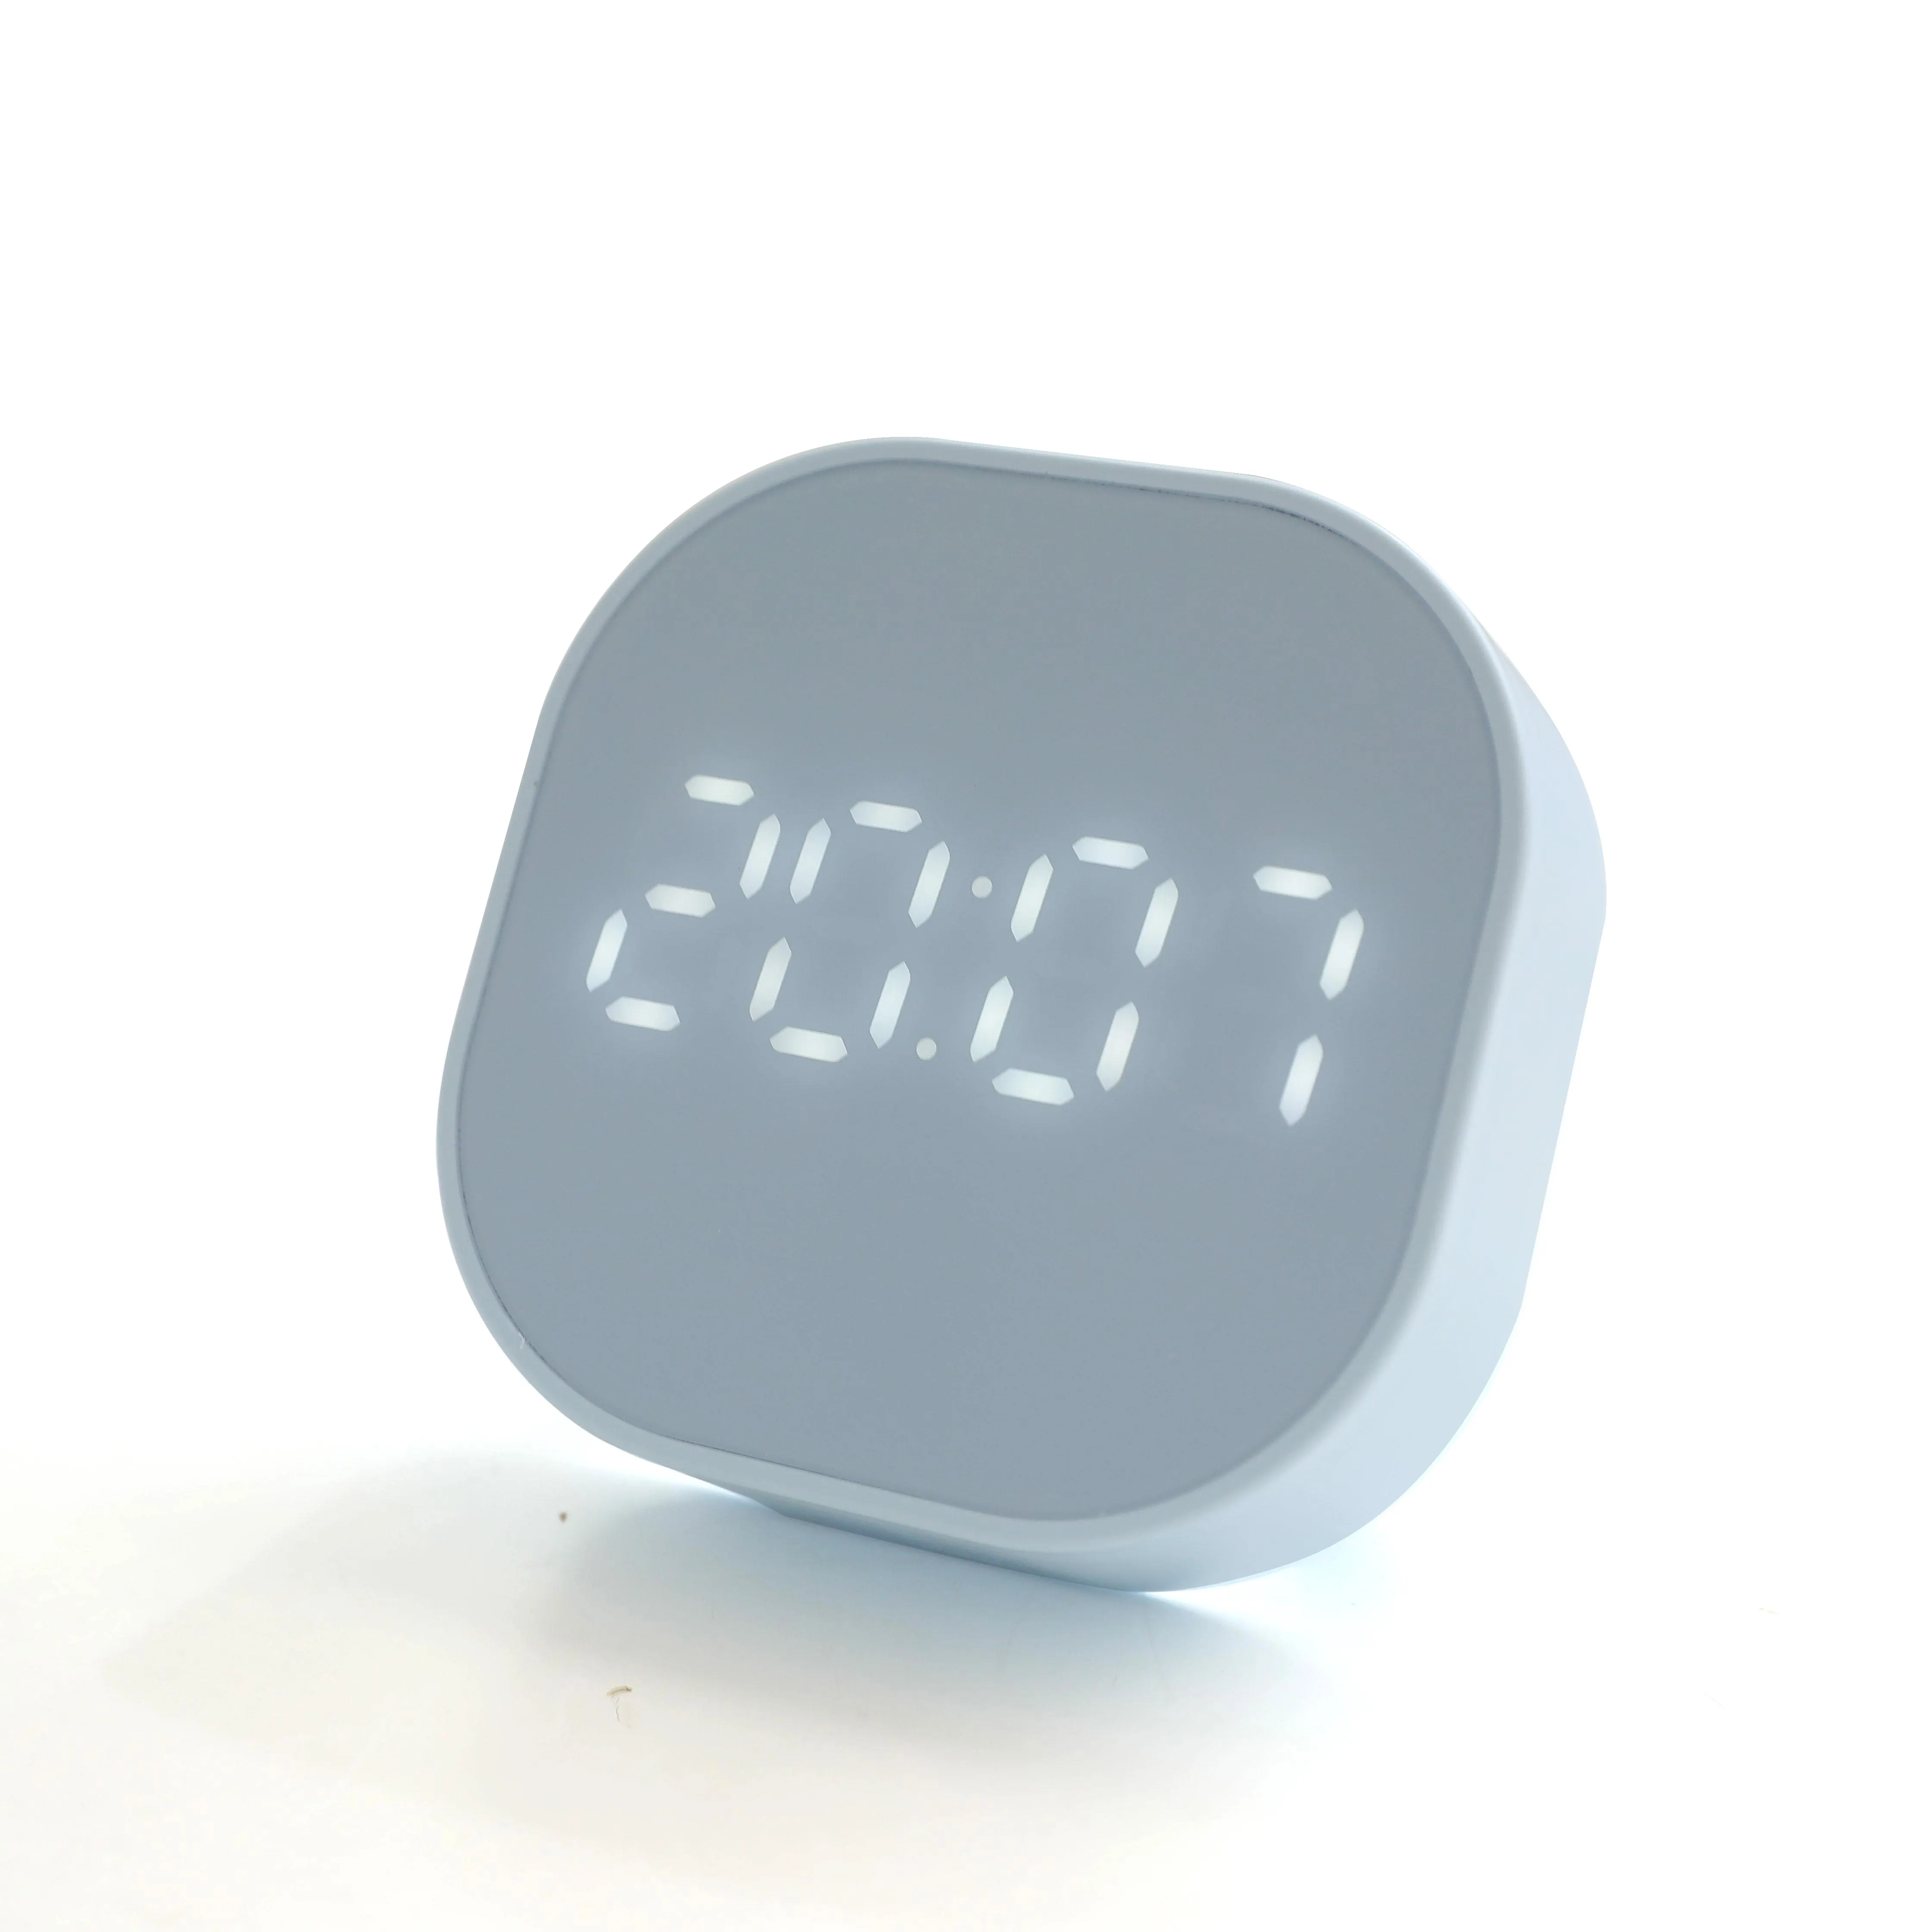 2020 LED Light Mini Modern Cube Desk & Table Clocks Smart Digital Kids Led Alarm Clock with Displays Time